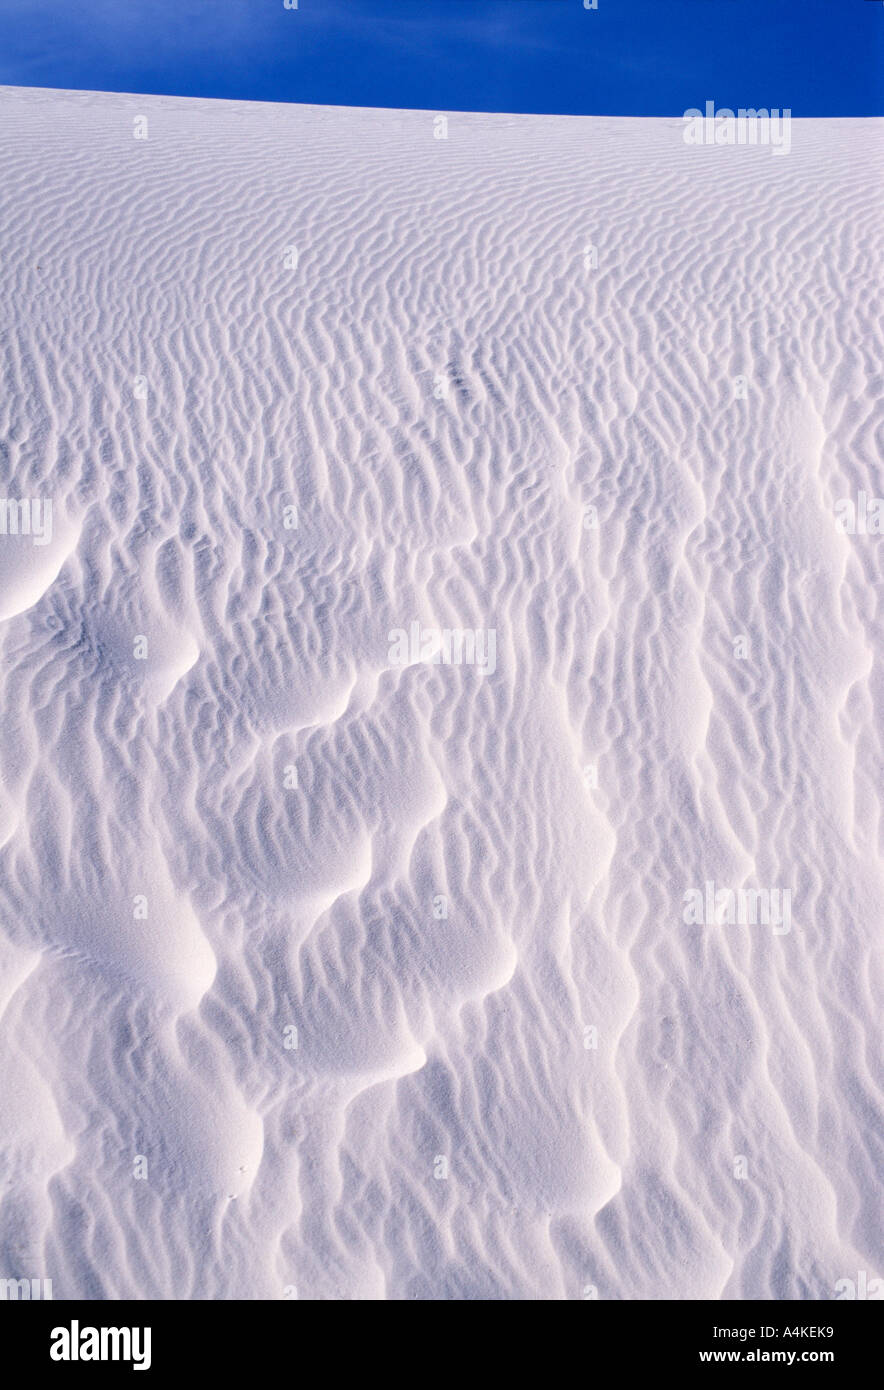 White sand dunes Stock Photo